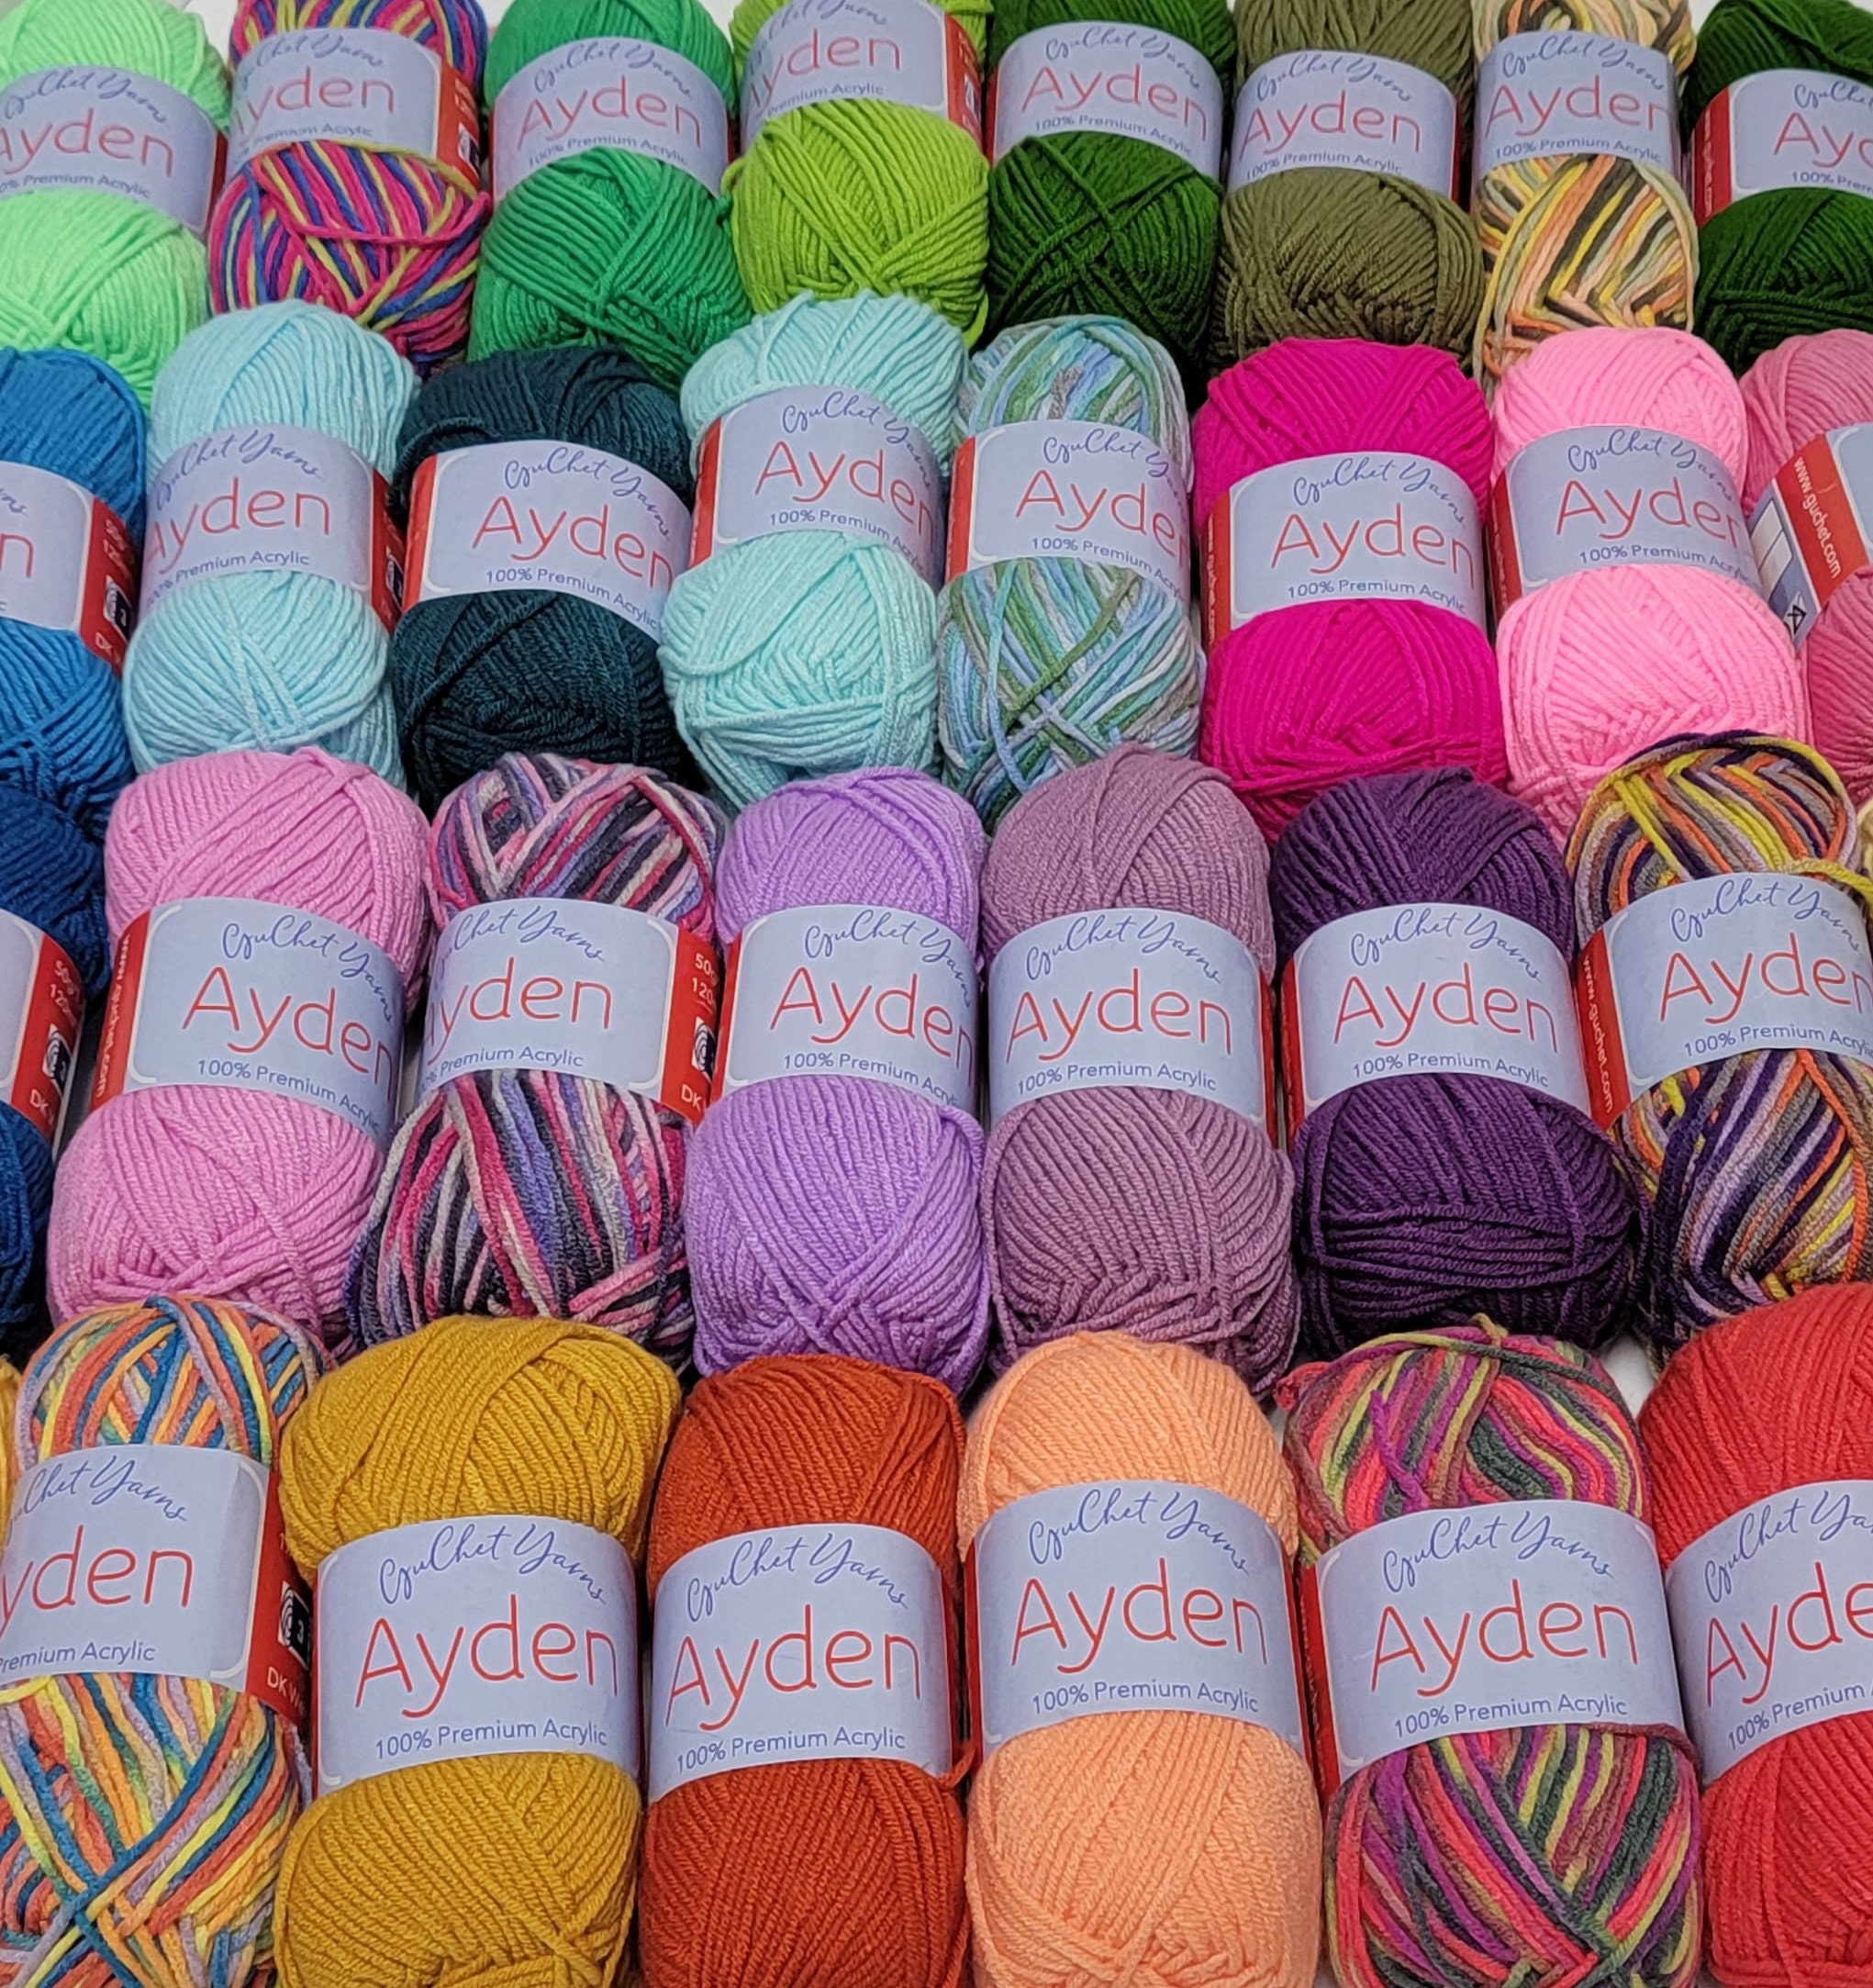 6 Pieces 50 g Crochet Yarn Multi-Colored Acrylic Knitting Yarn Hand  Knitting Yarn Weaving Yarn Crochet Thread (Yellow Orange Brown, Purple  White